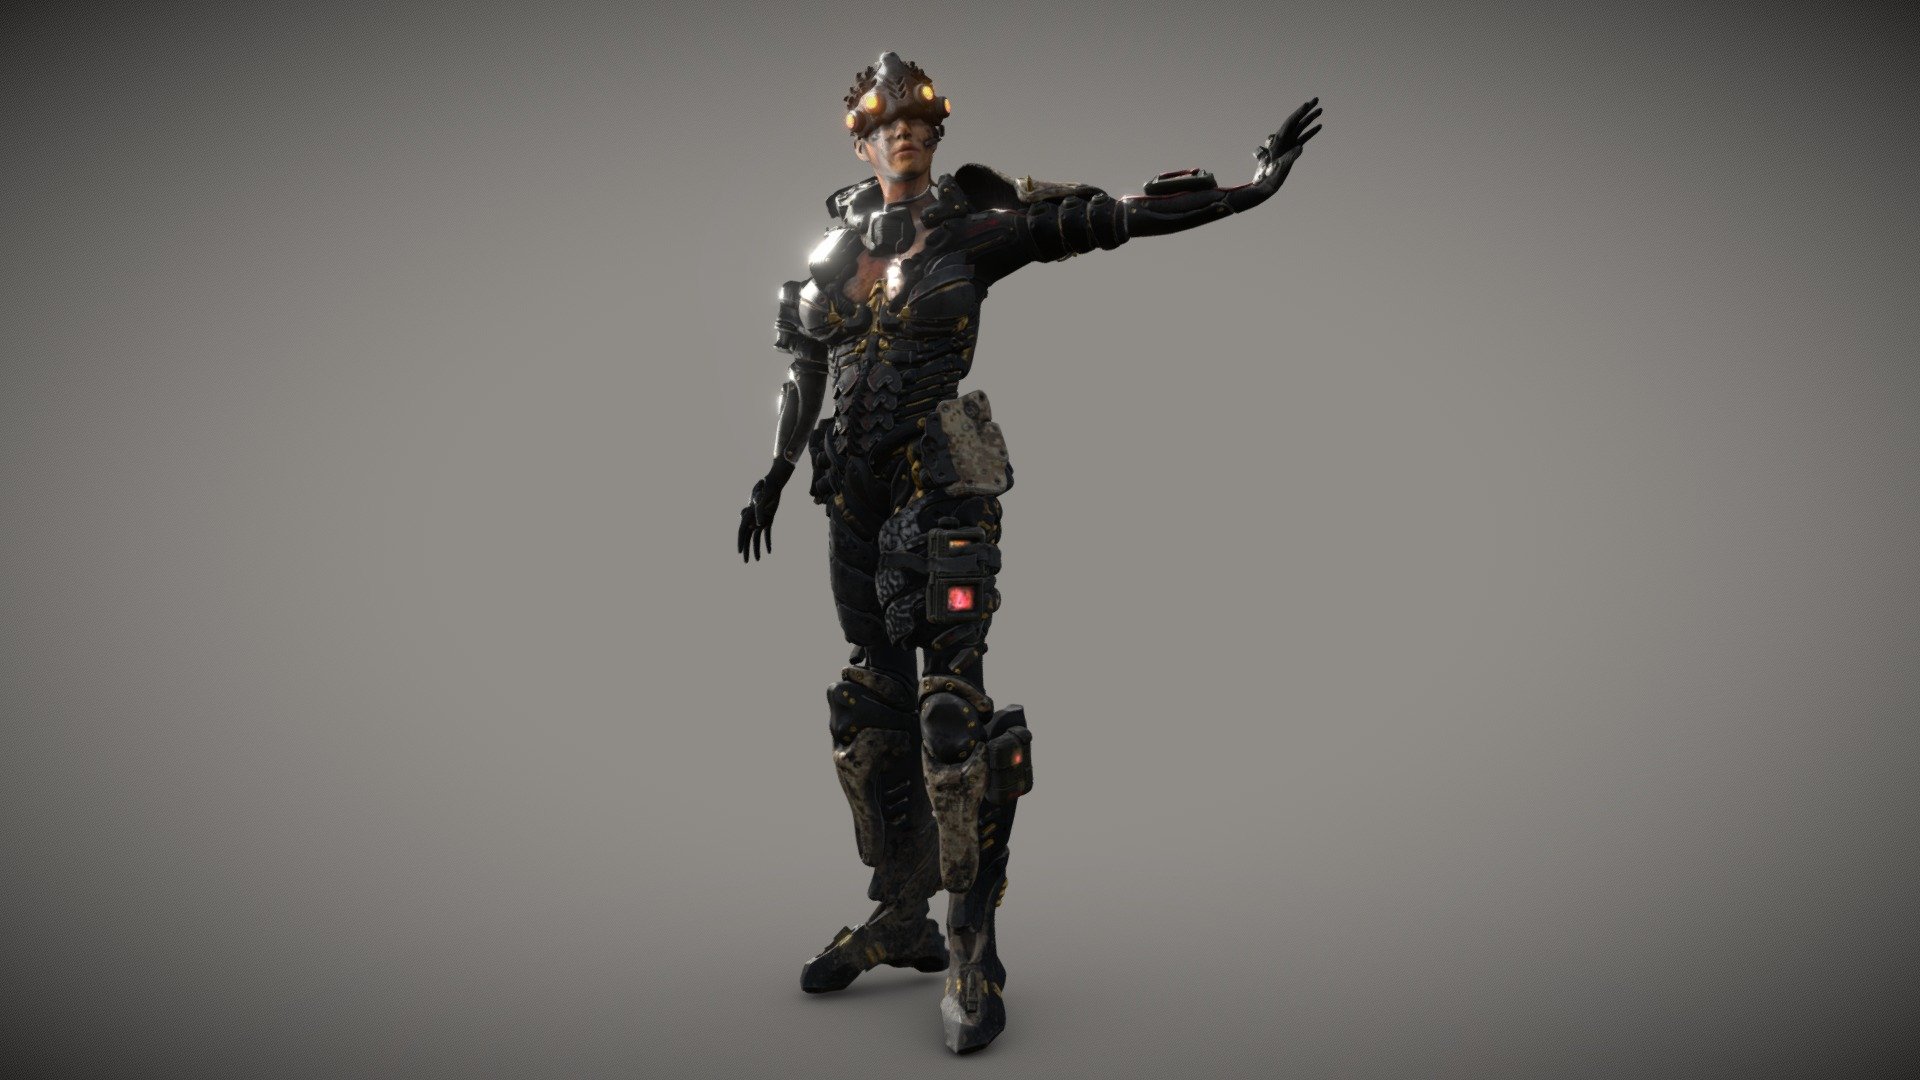 Armored Female Future Soldier